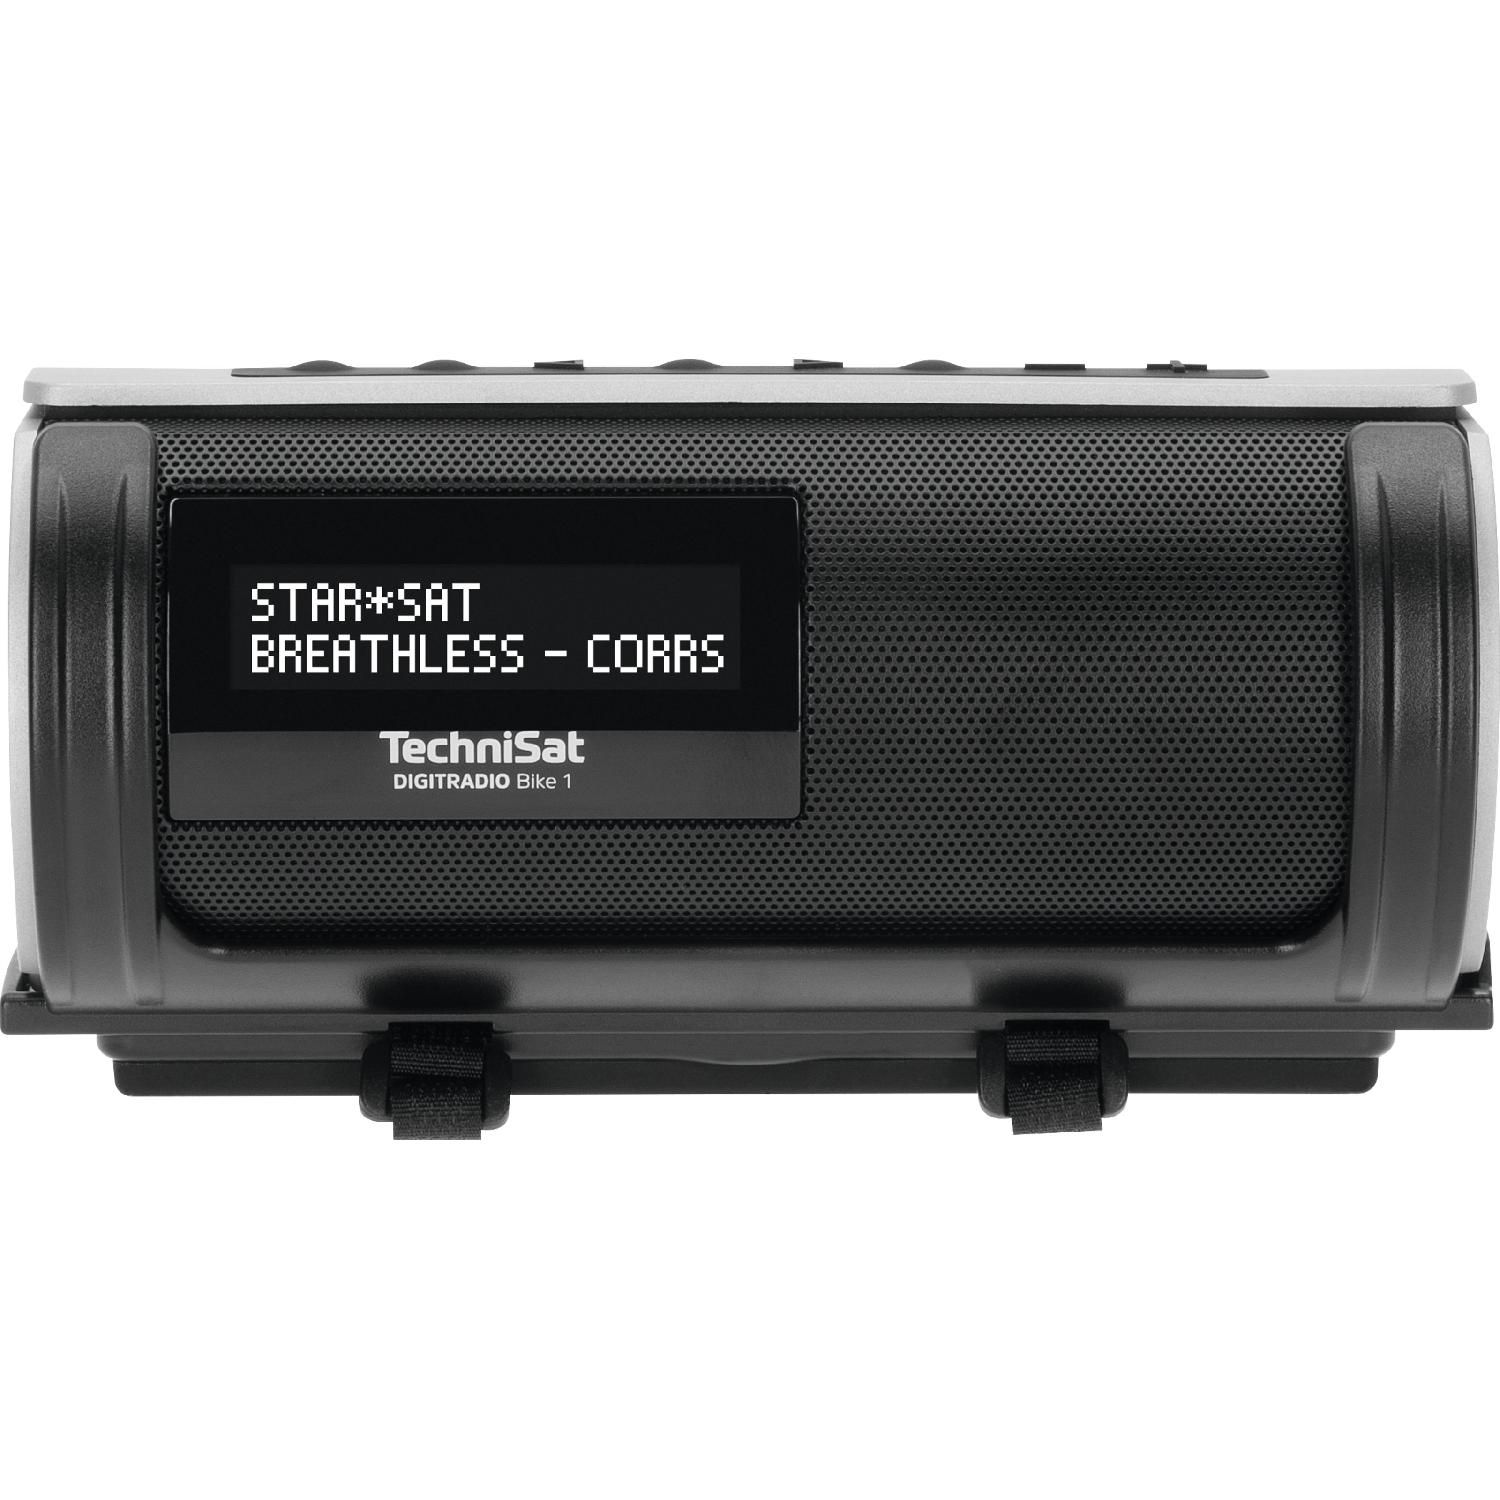 DIGITRADIO UKW, Bluetooth, DAB+, Bike DAB, 1 DAB+ Radio/Lautsprecher, schwarz/silber DAB+, AM, FM, TECHNISAT